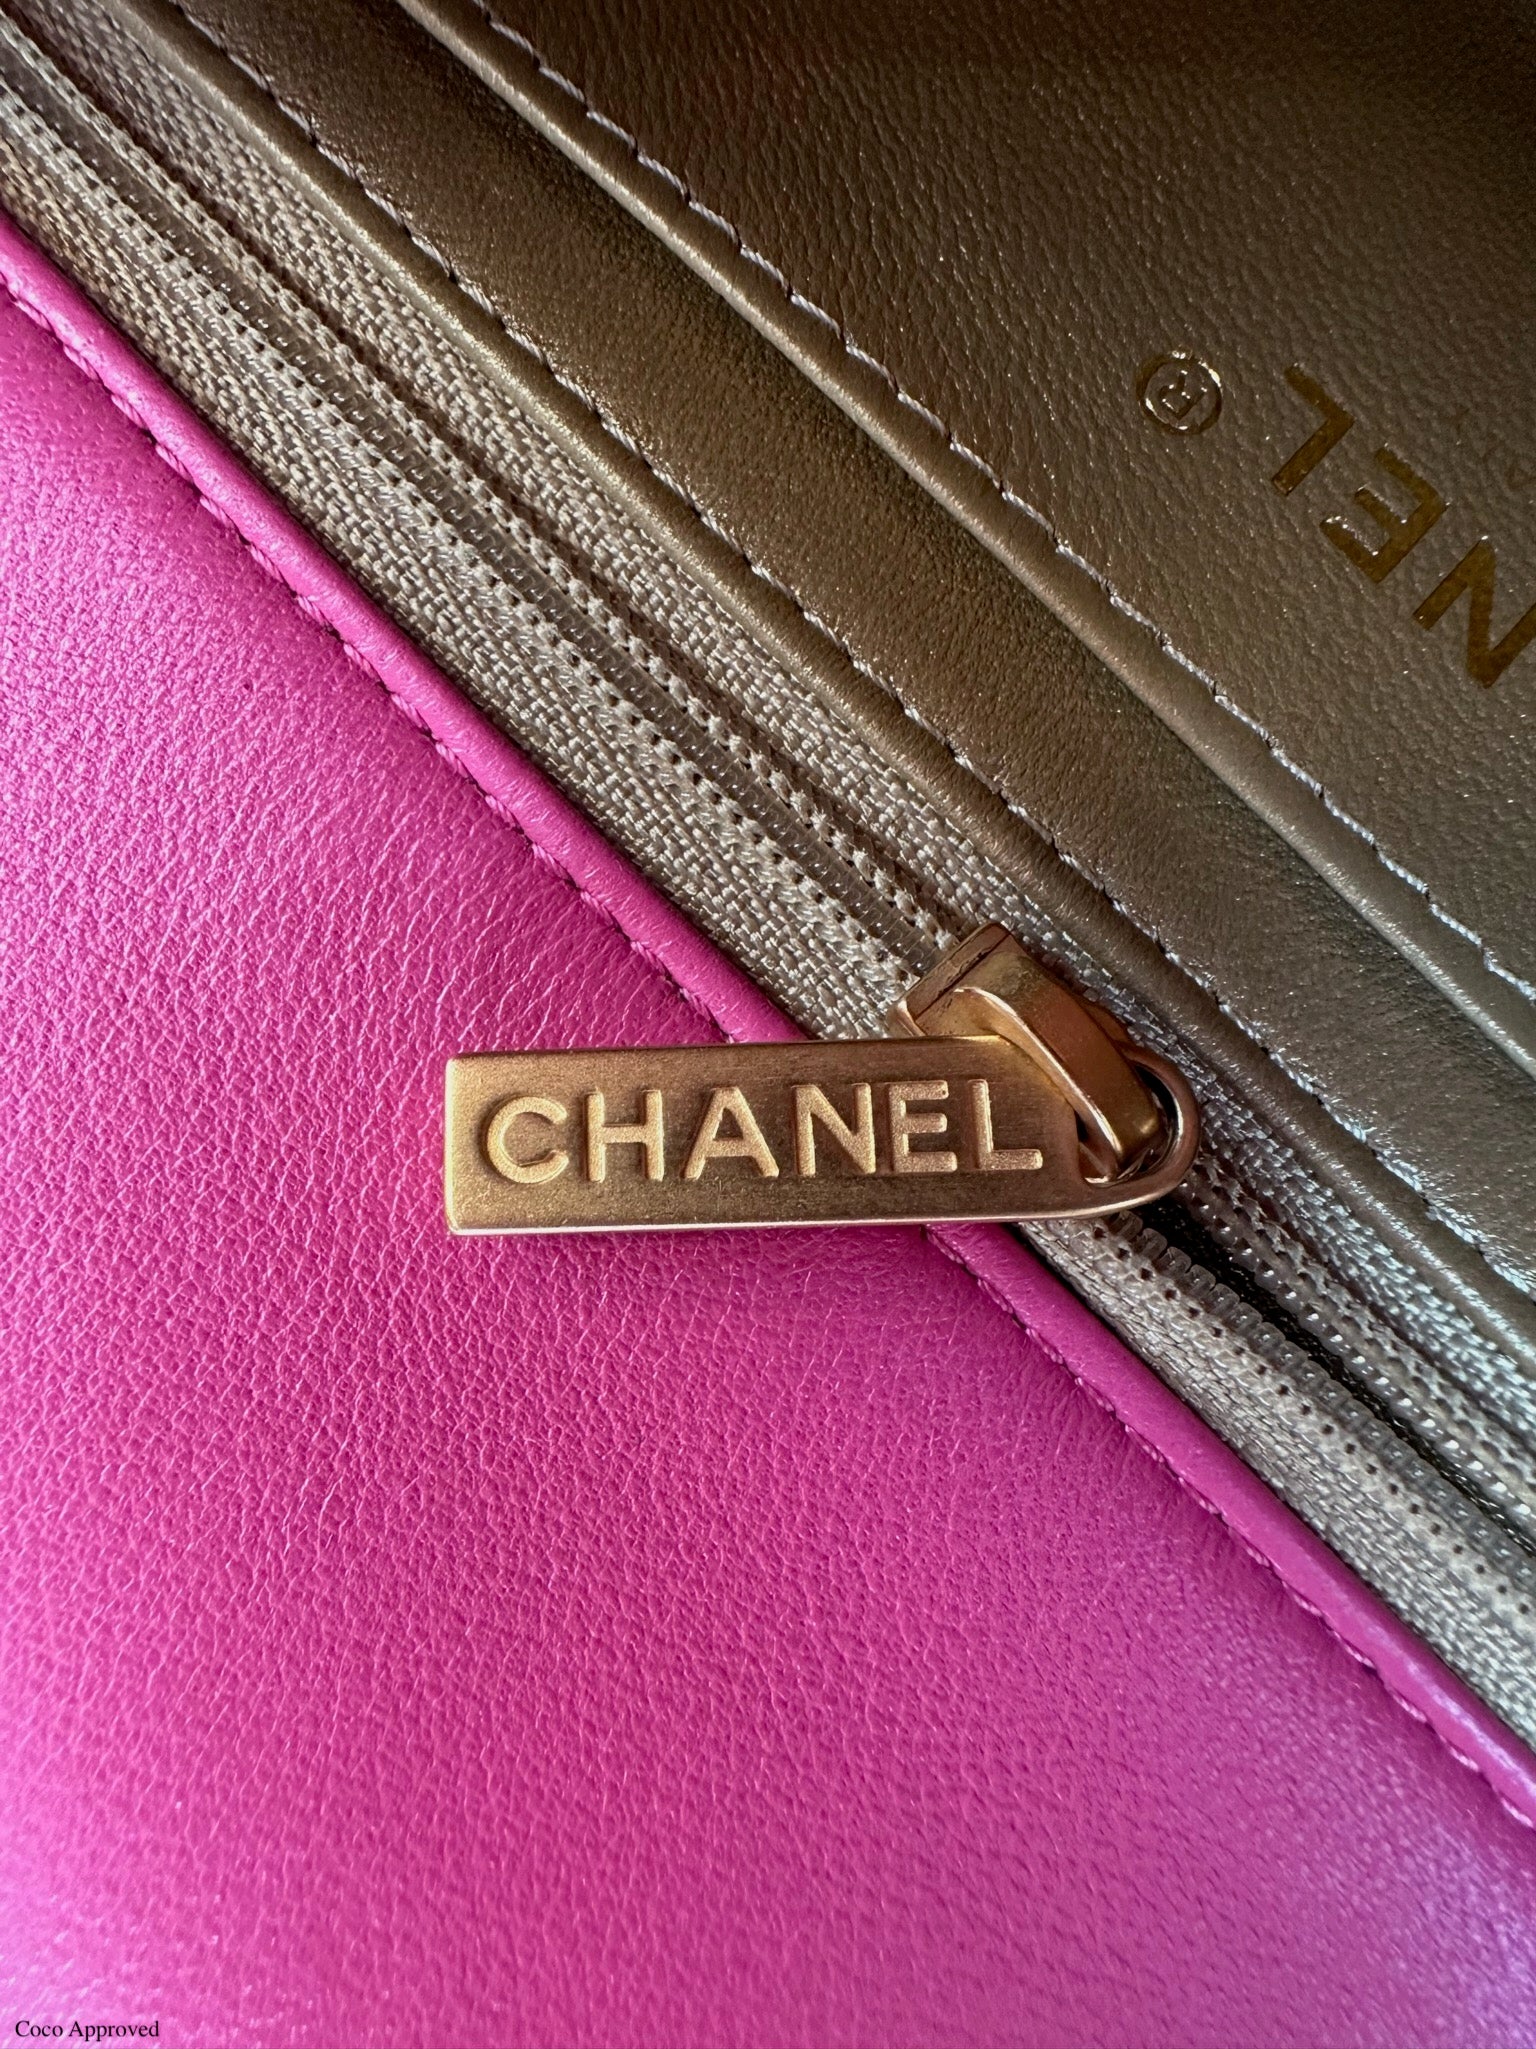 Chanel Pearl Crush Mini Rectangular Flap - Real or Fake